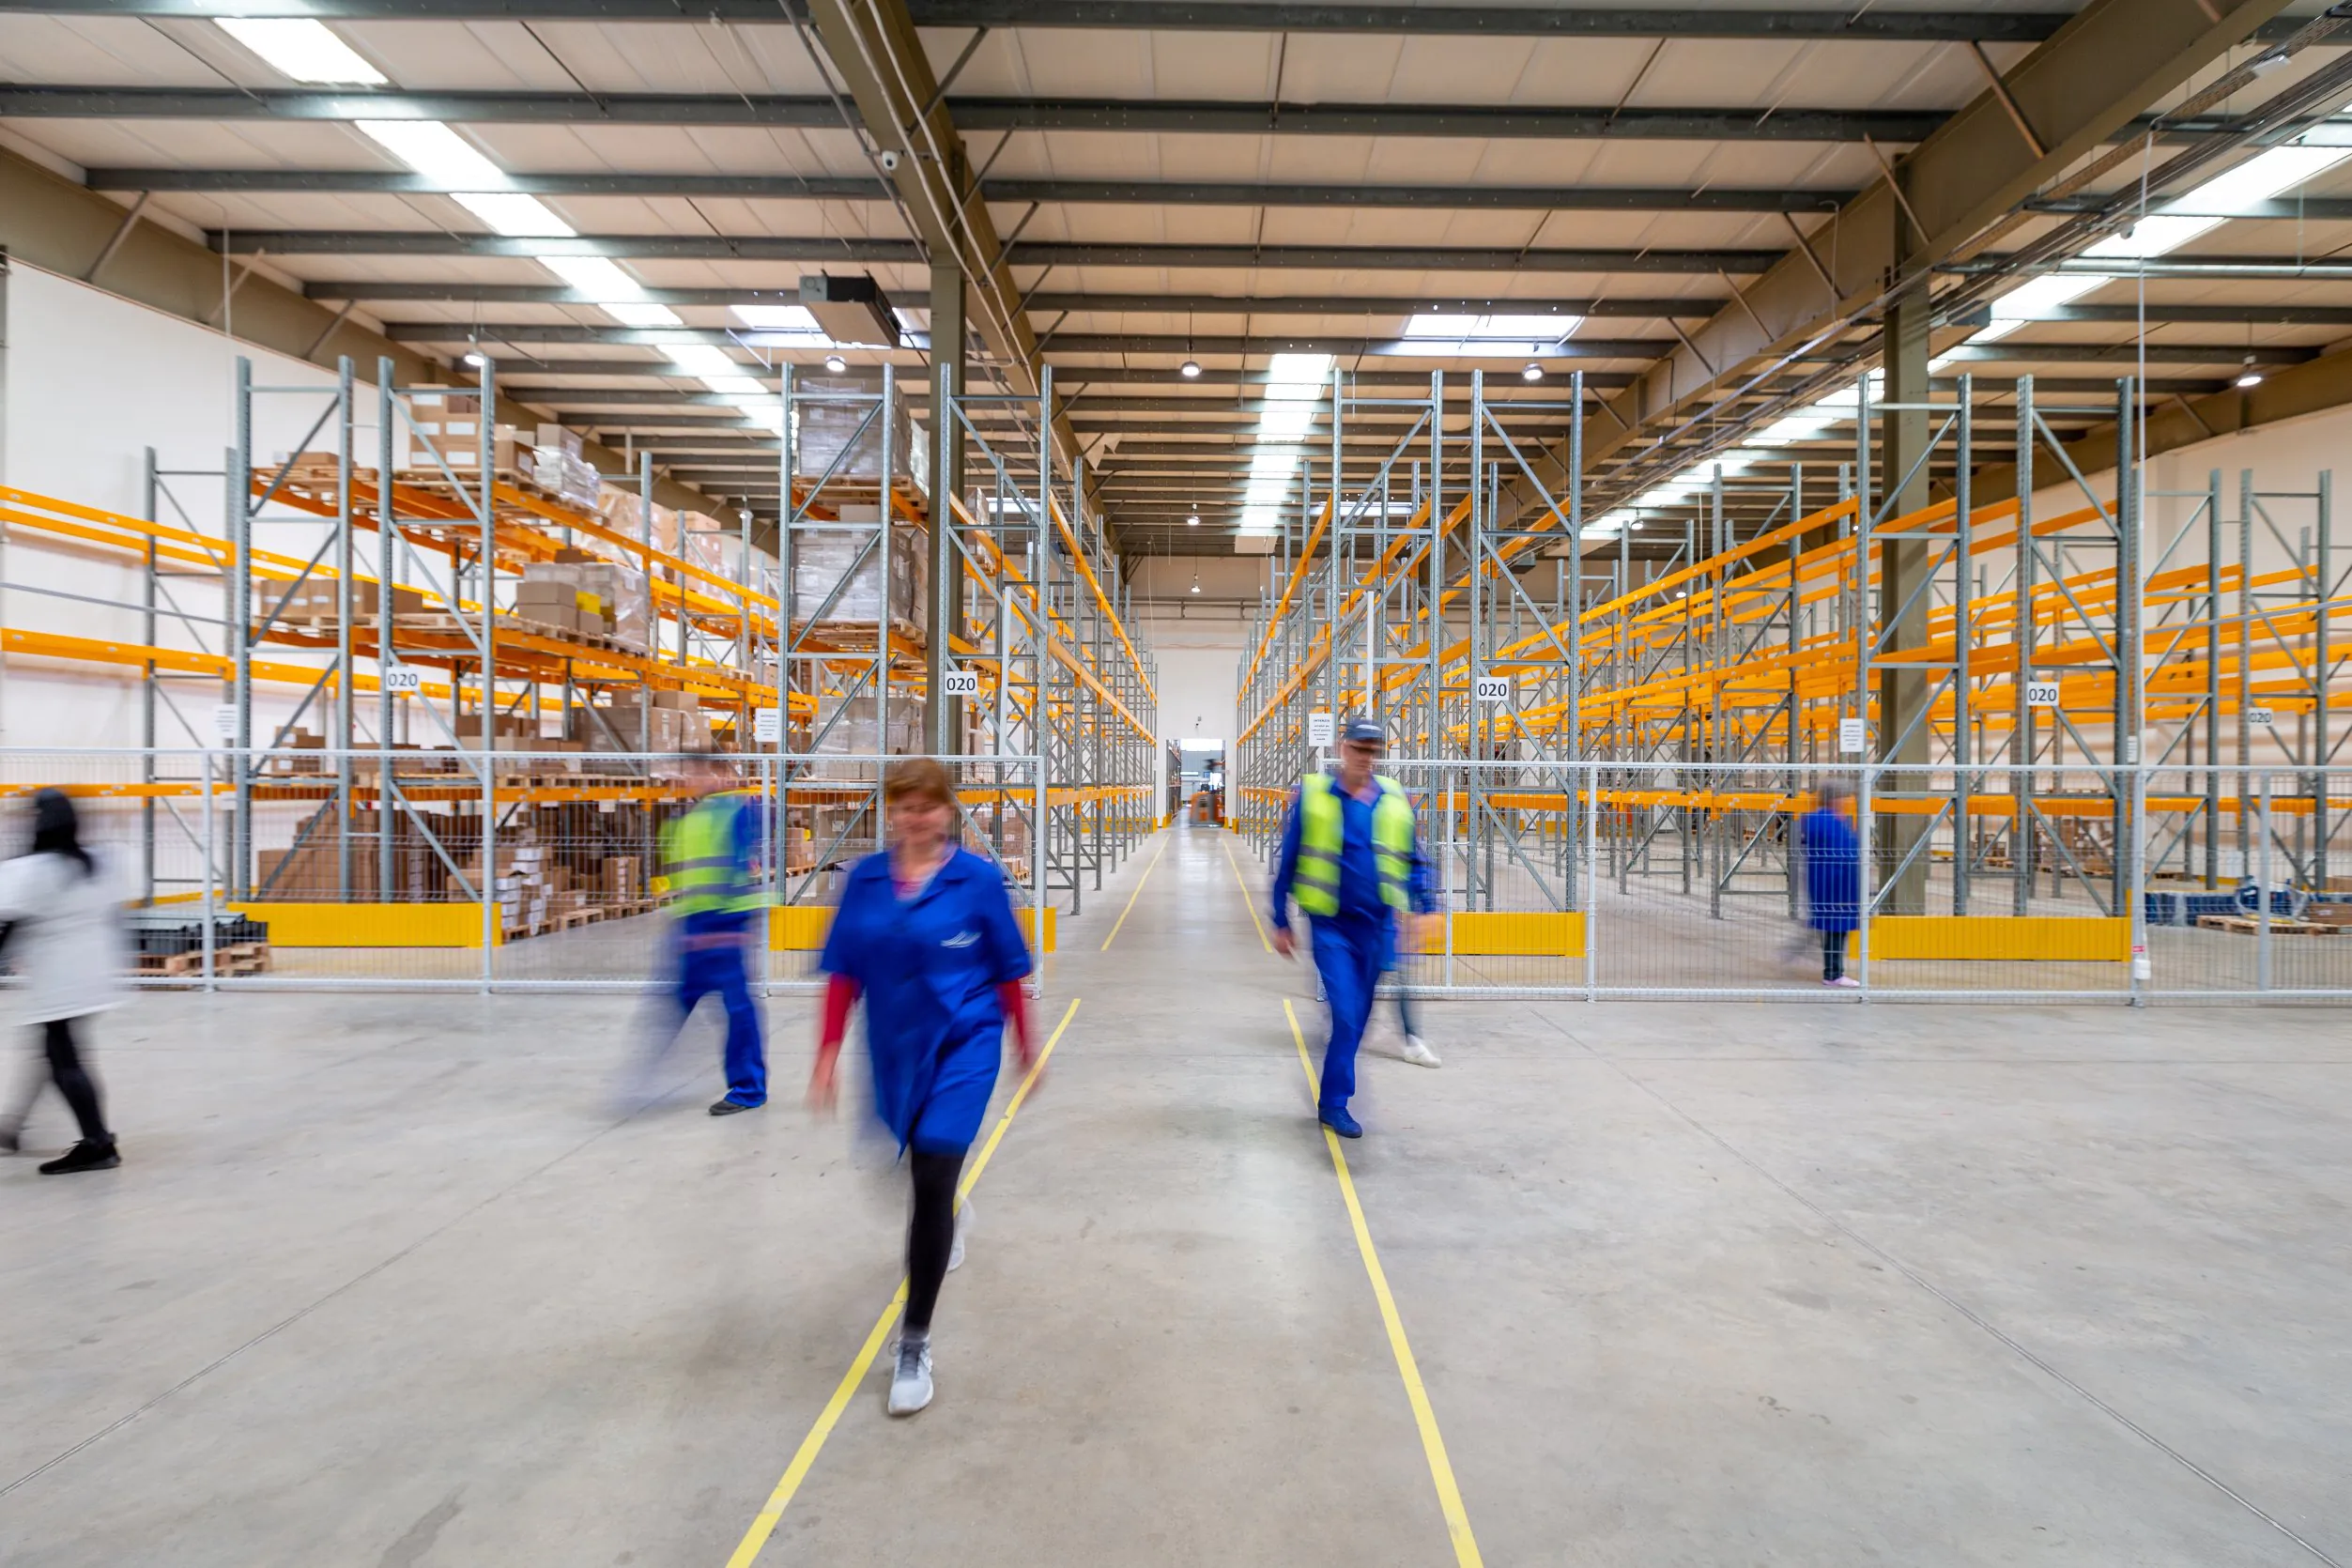 Benefits of Industrial Lights in Warehouse Facilities